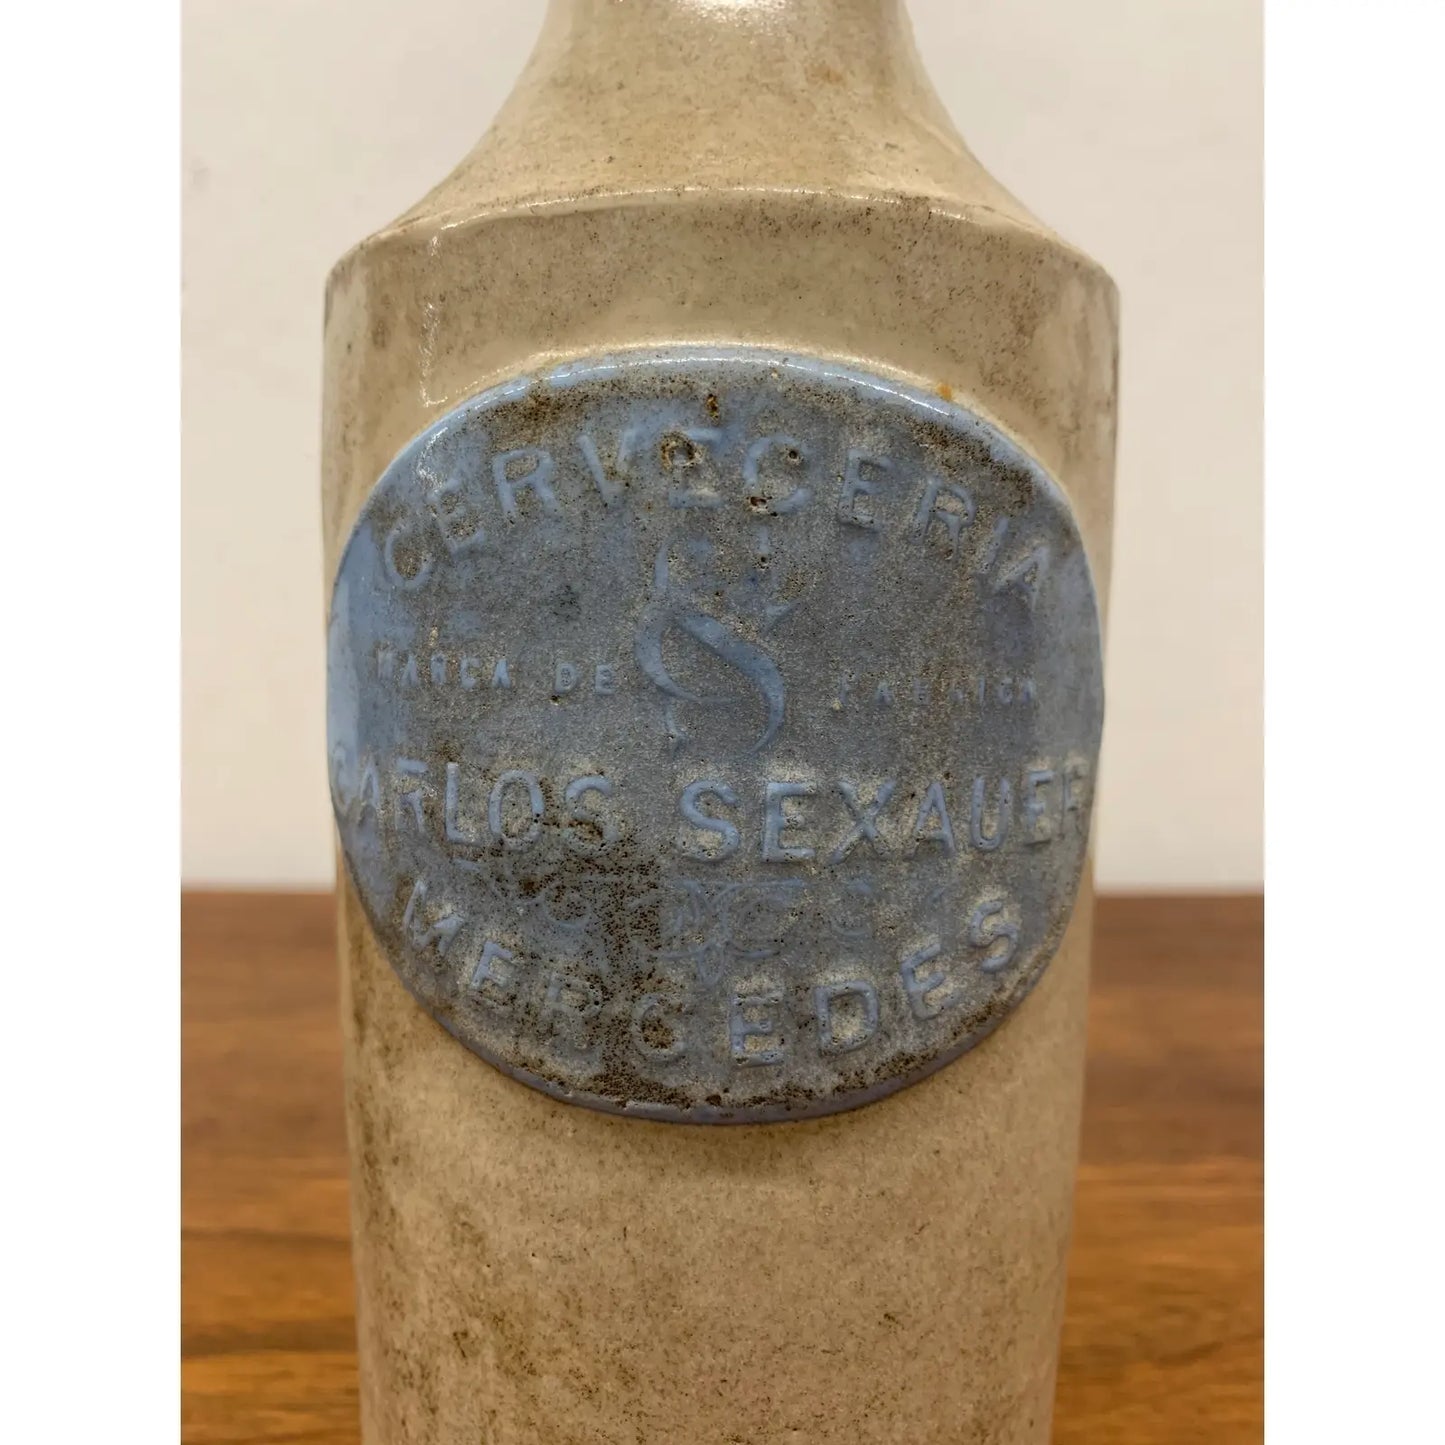 Antique Ceramic Beer Bottle From Argentina